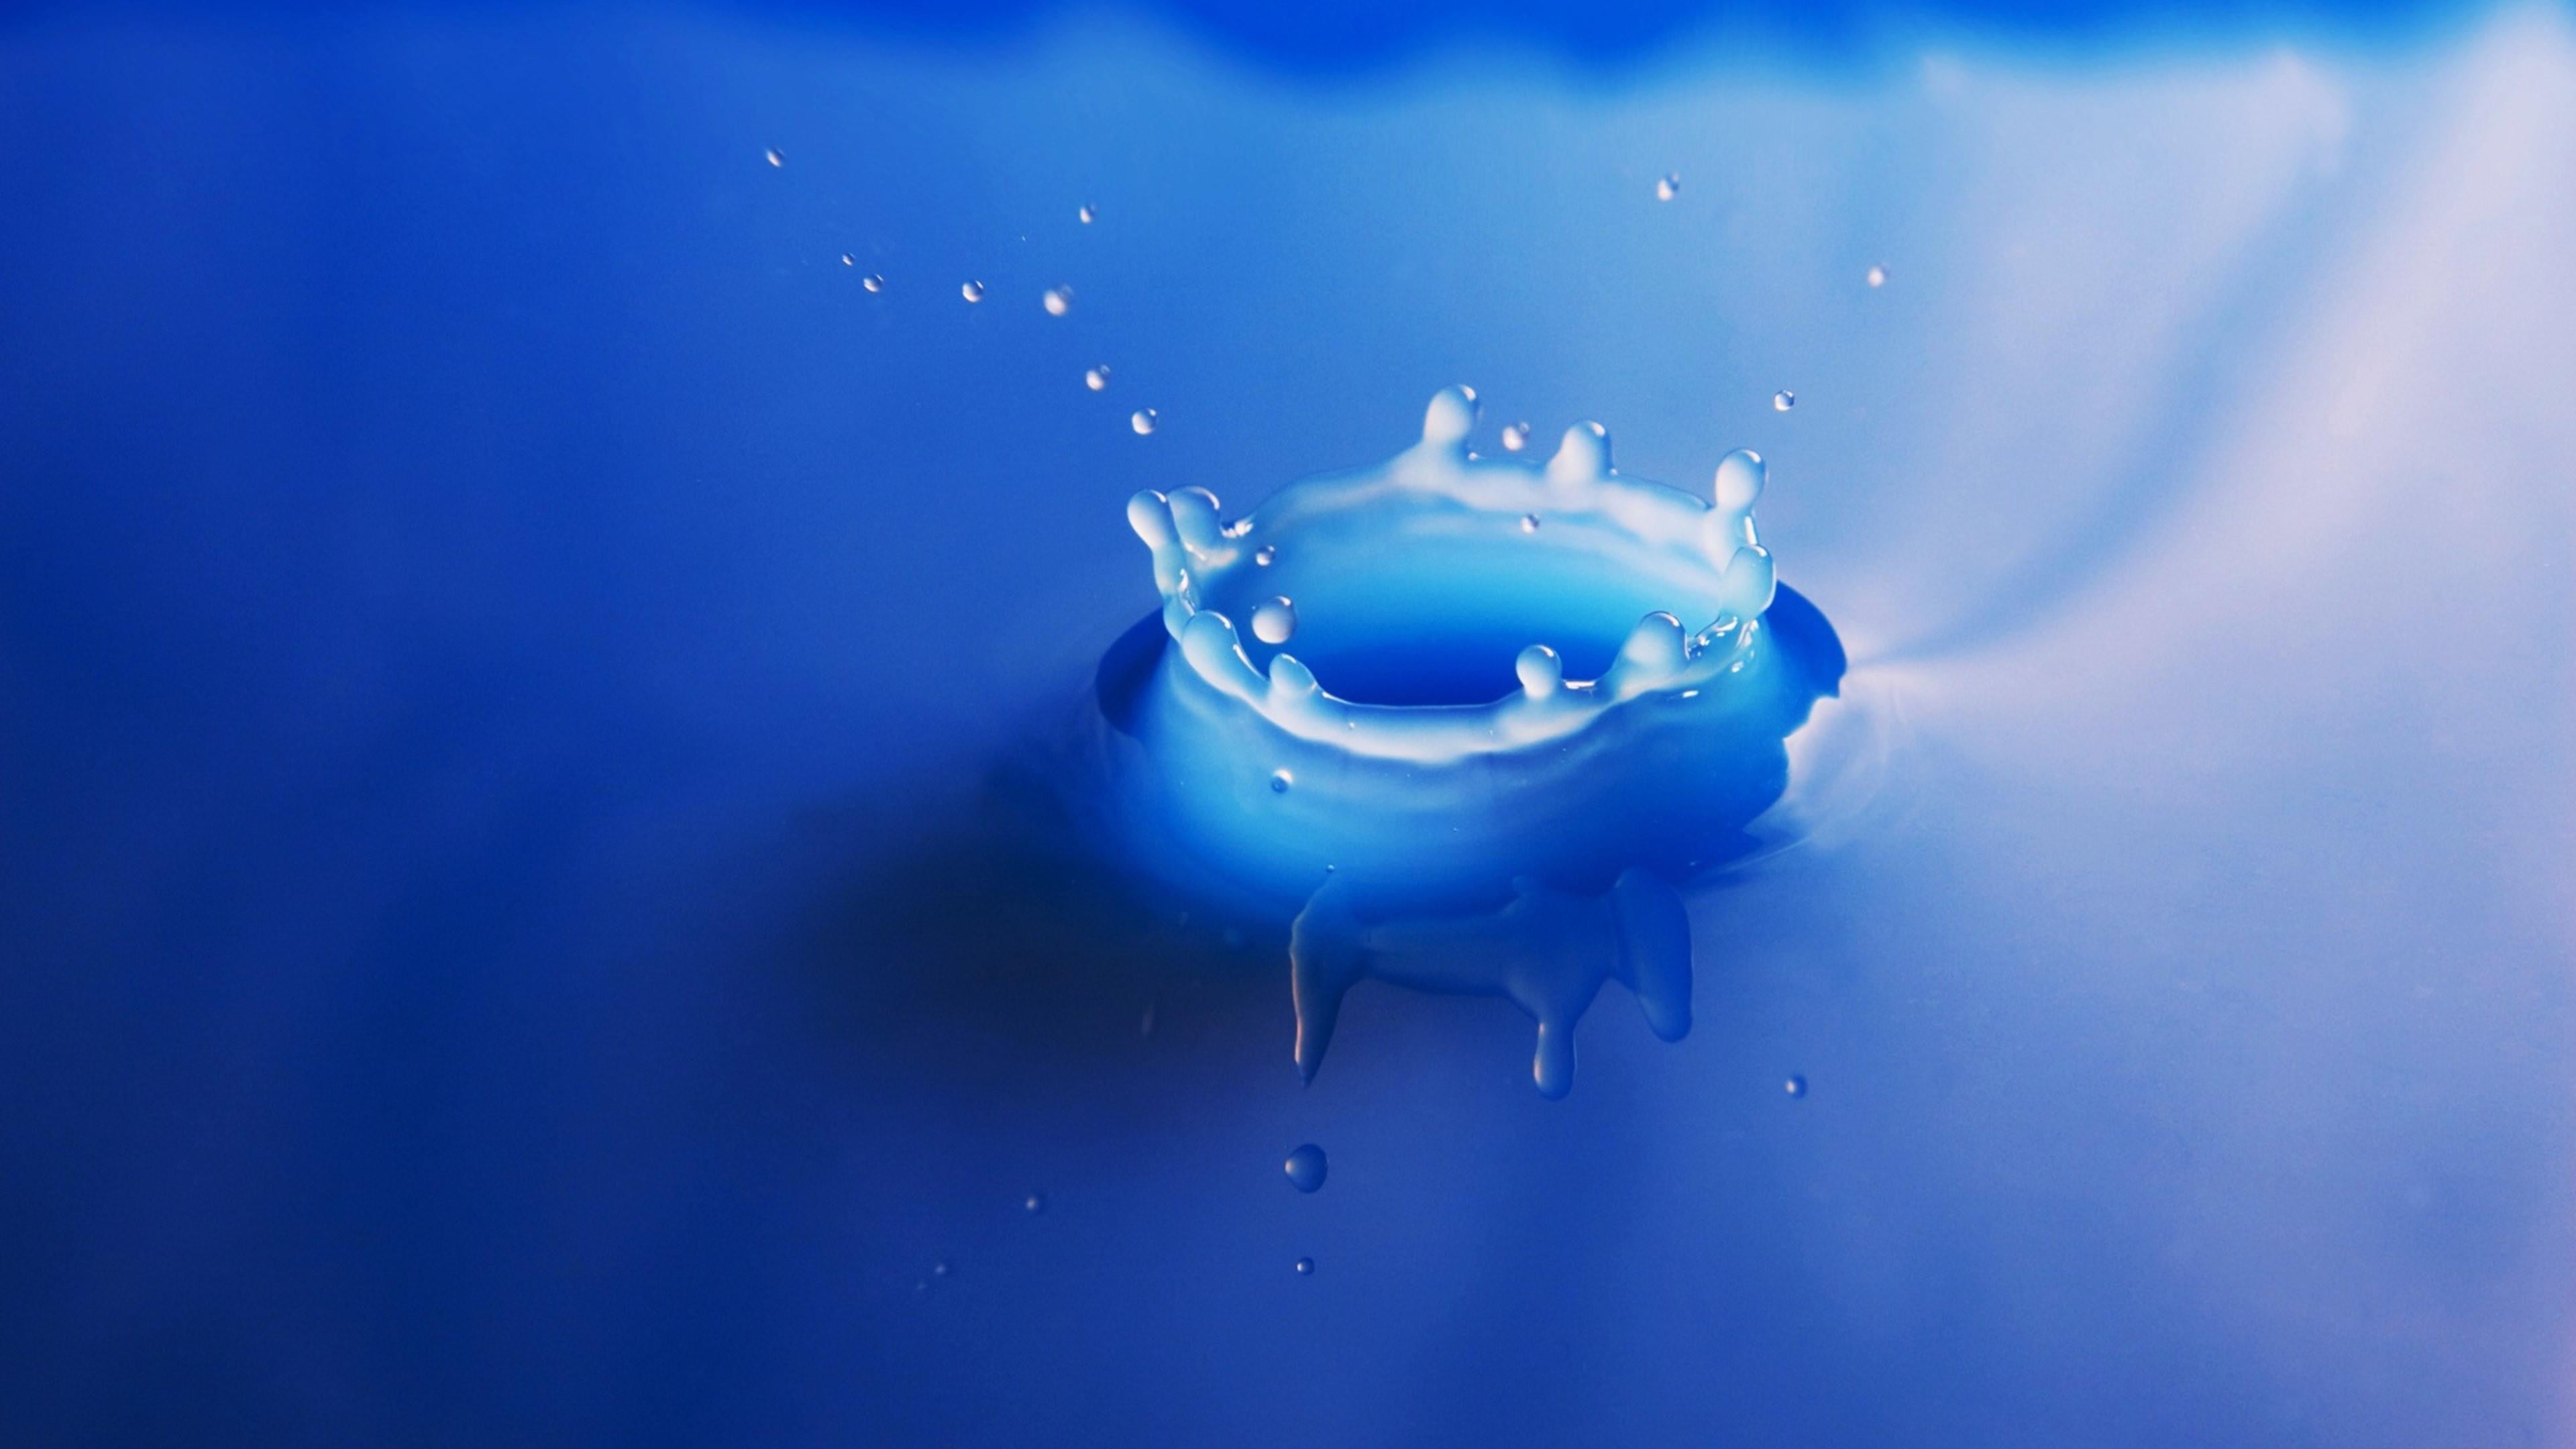 bluish, droplets, liquid, blue, water, motion, studio shot